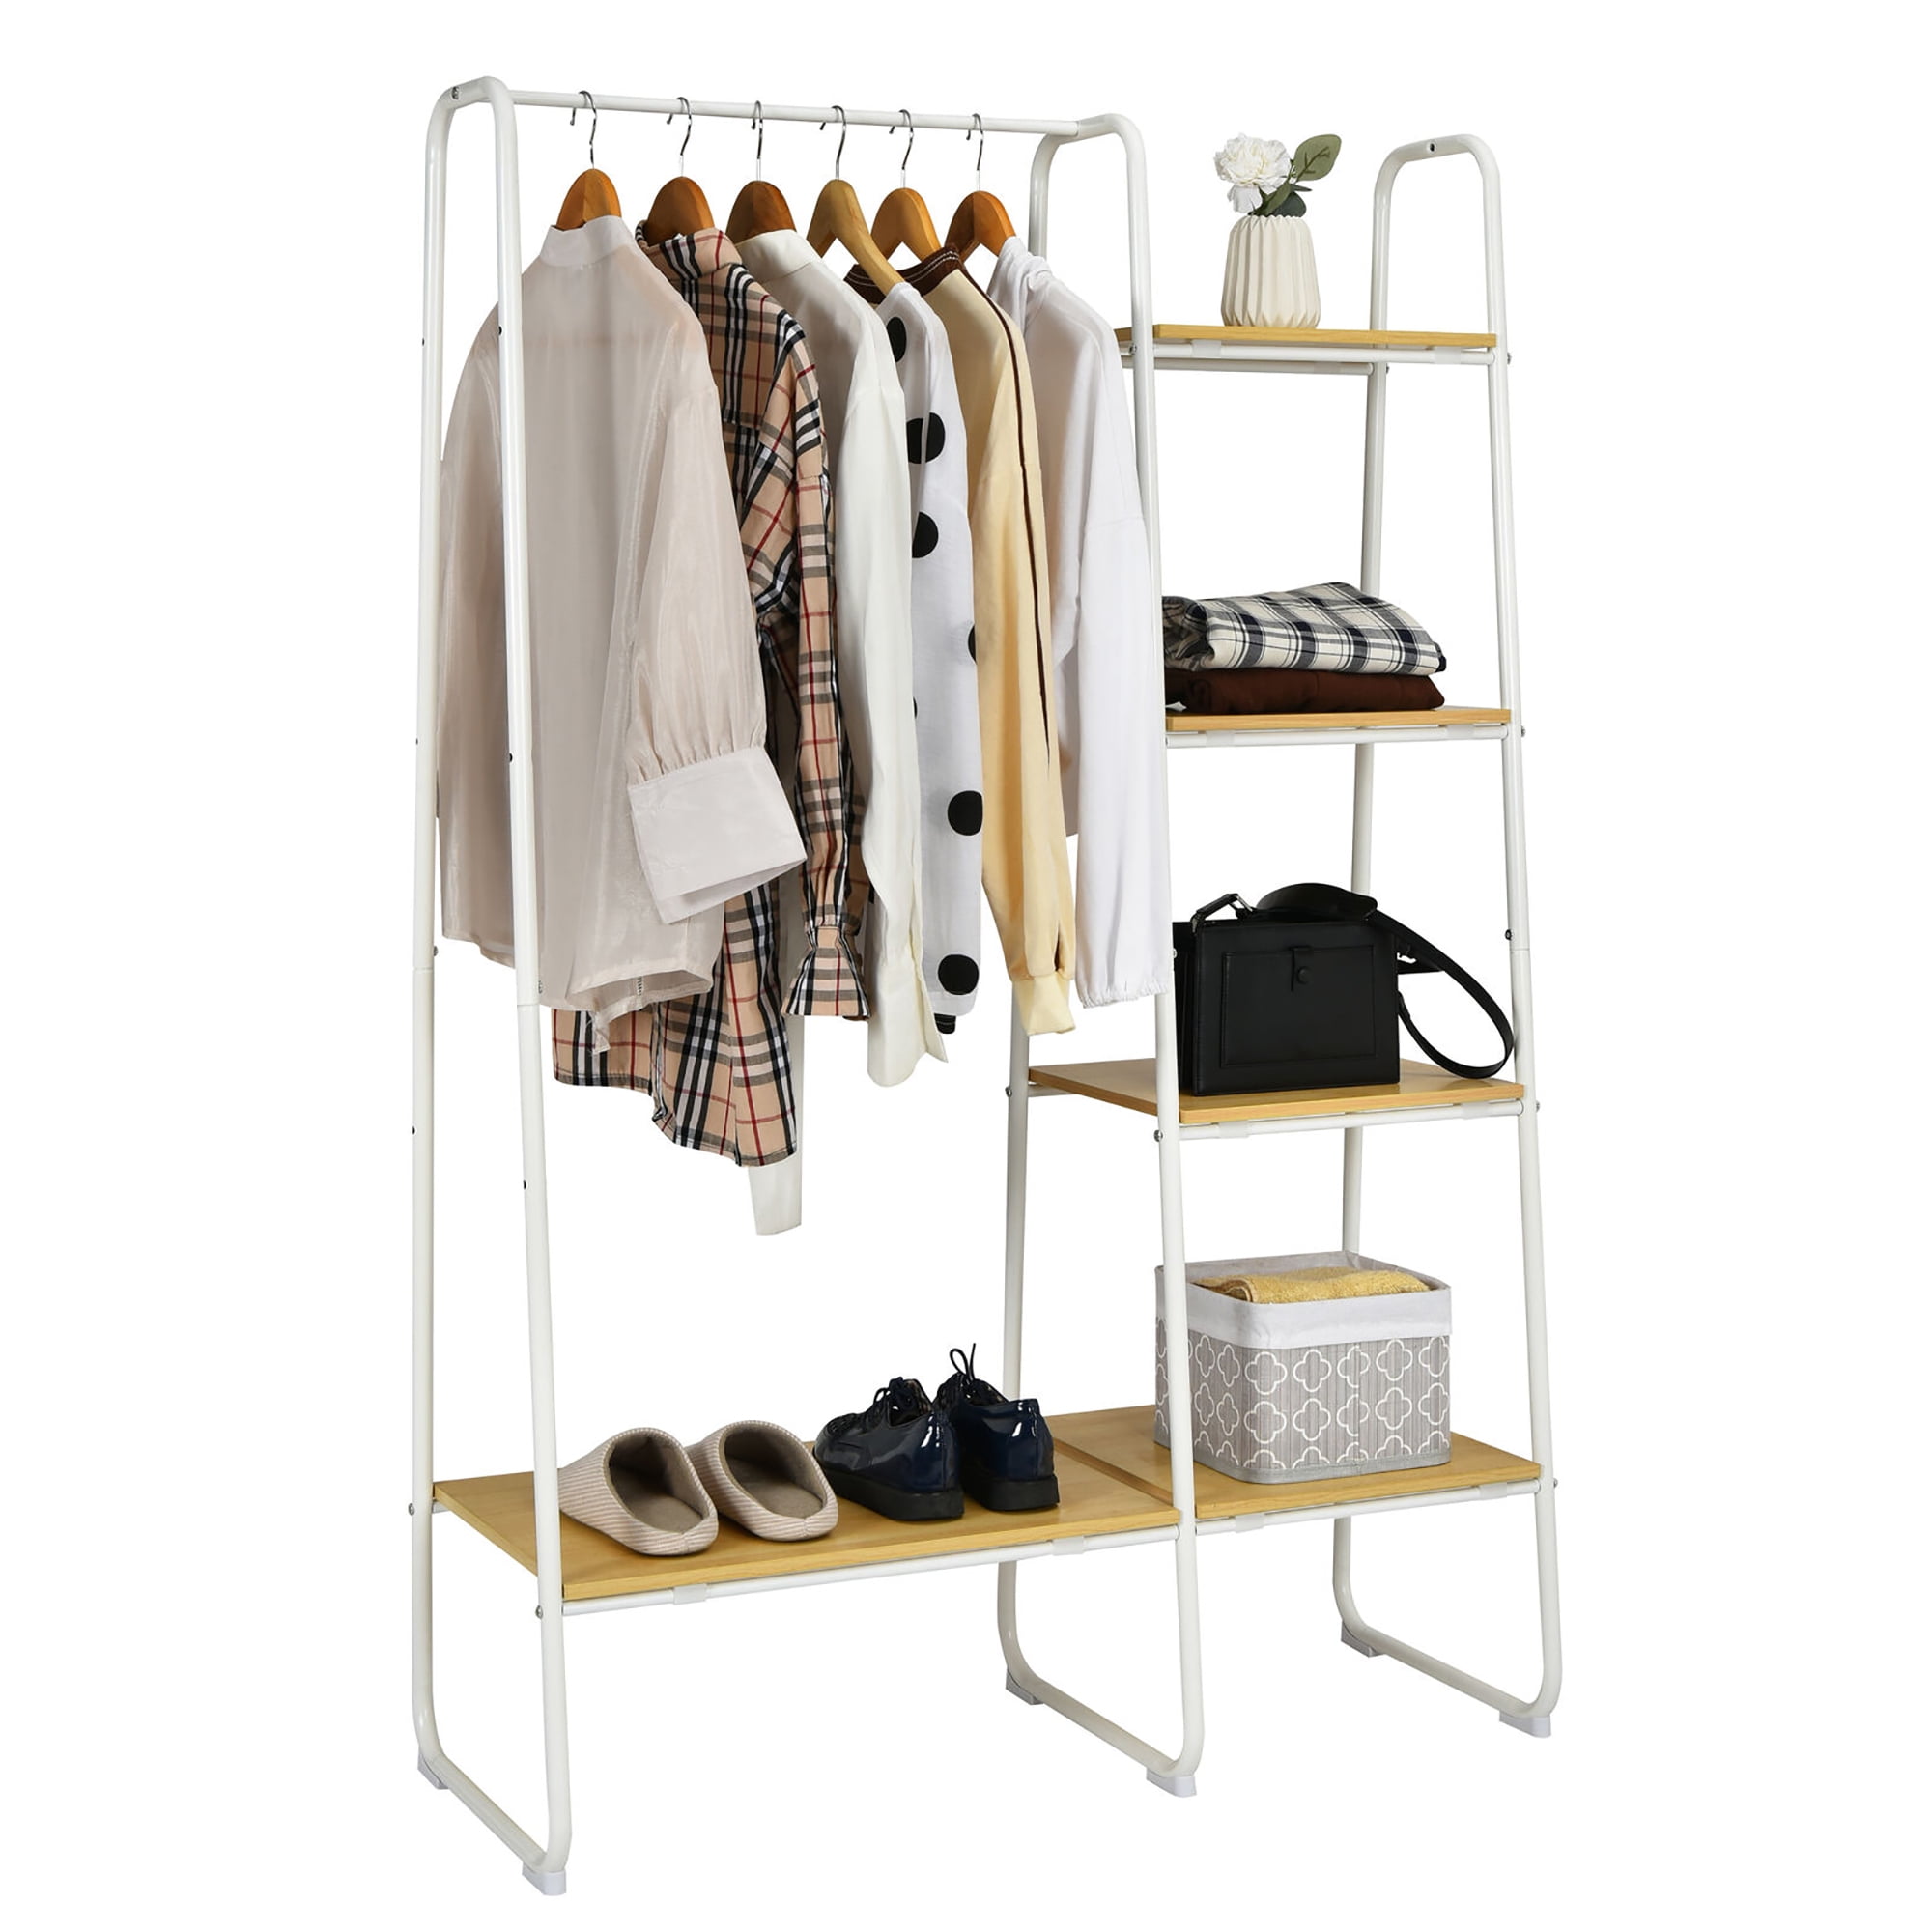 3 Tier Clothes Garment Hanging Clothing Coat Shoes Storage Rack Shelf 